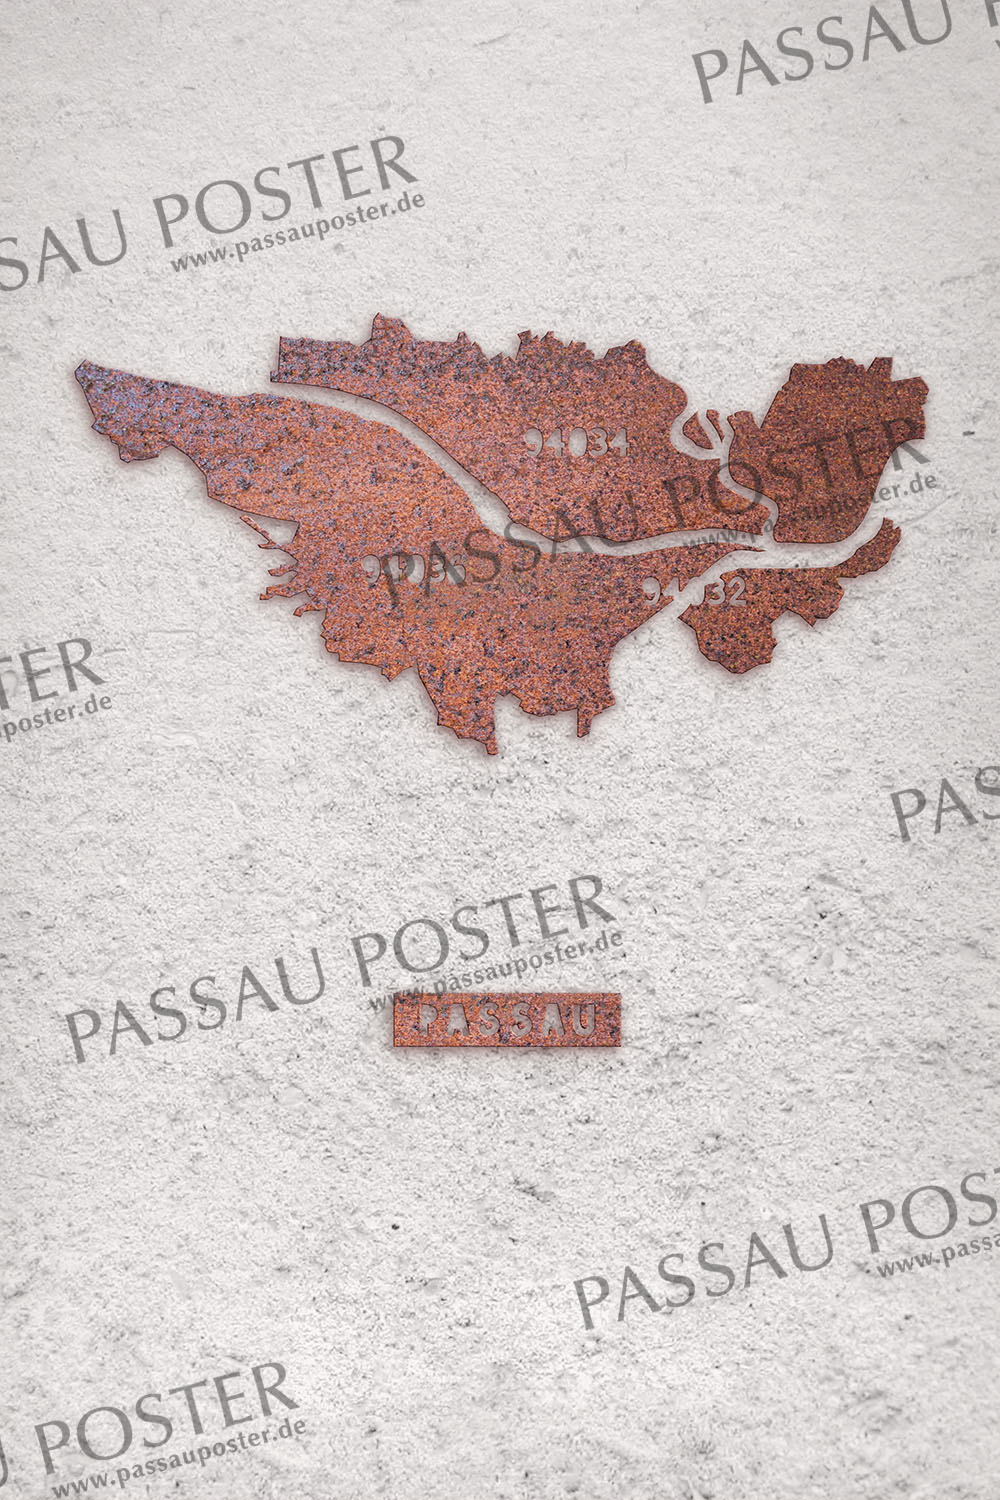 Passau Poster - Passauer Stadtgebiet